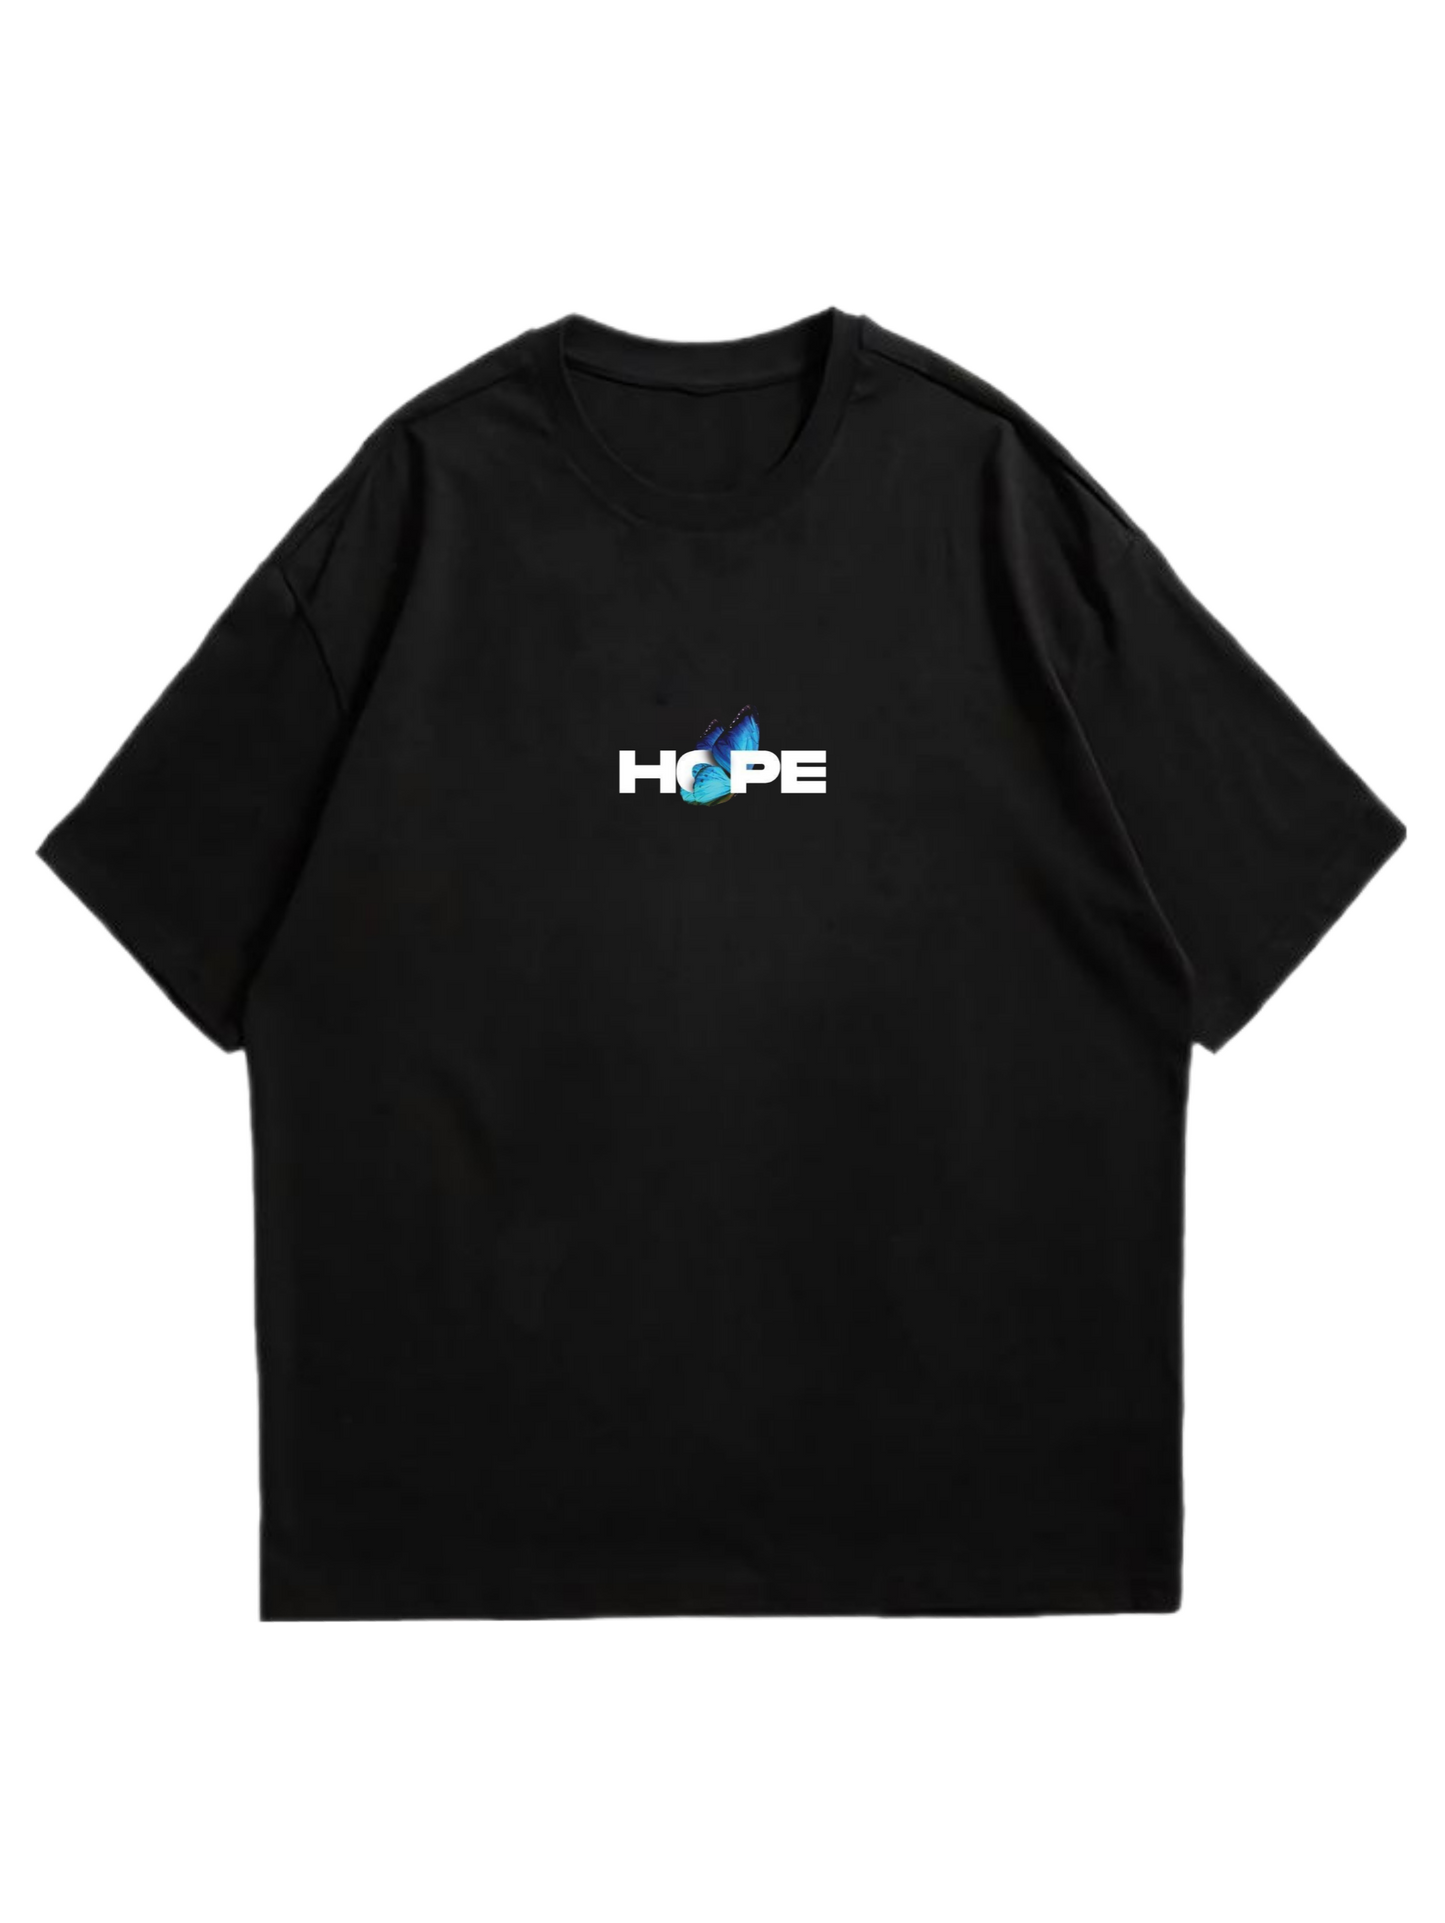 'Hope 2' graphic tee